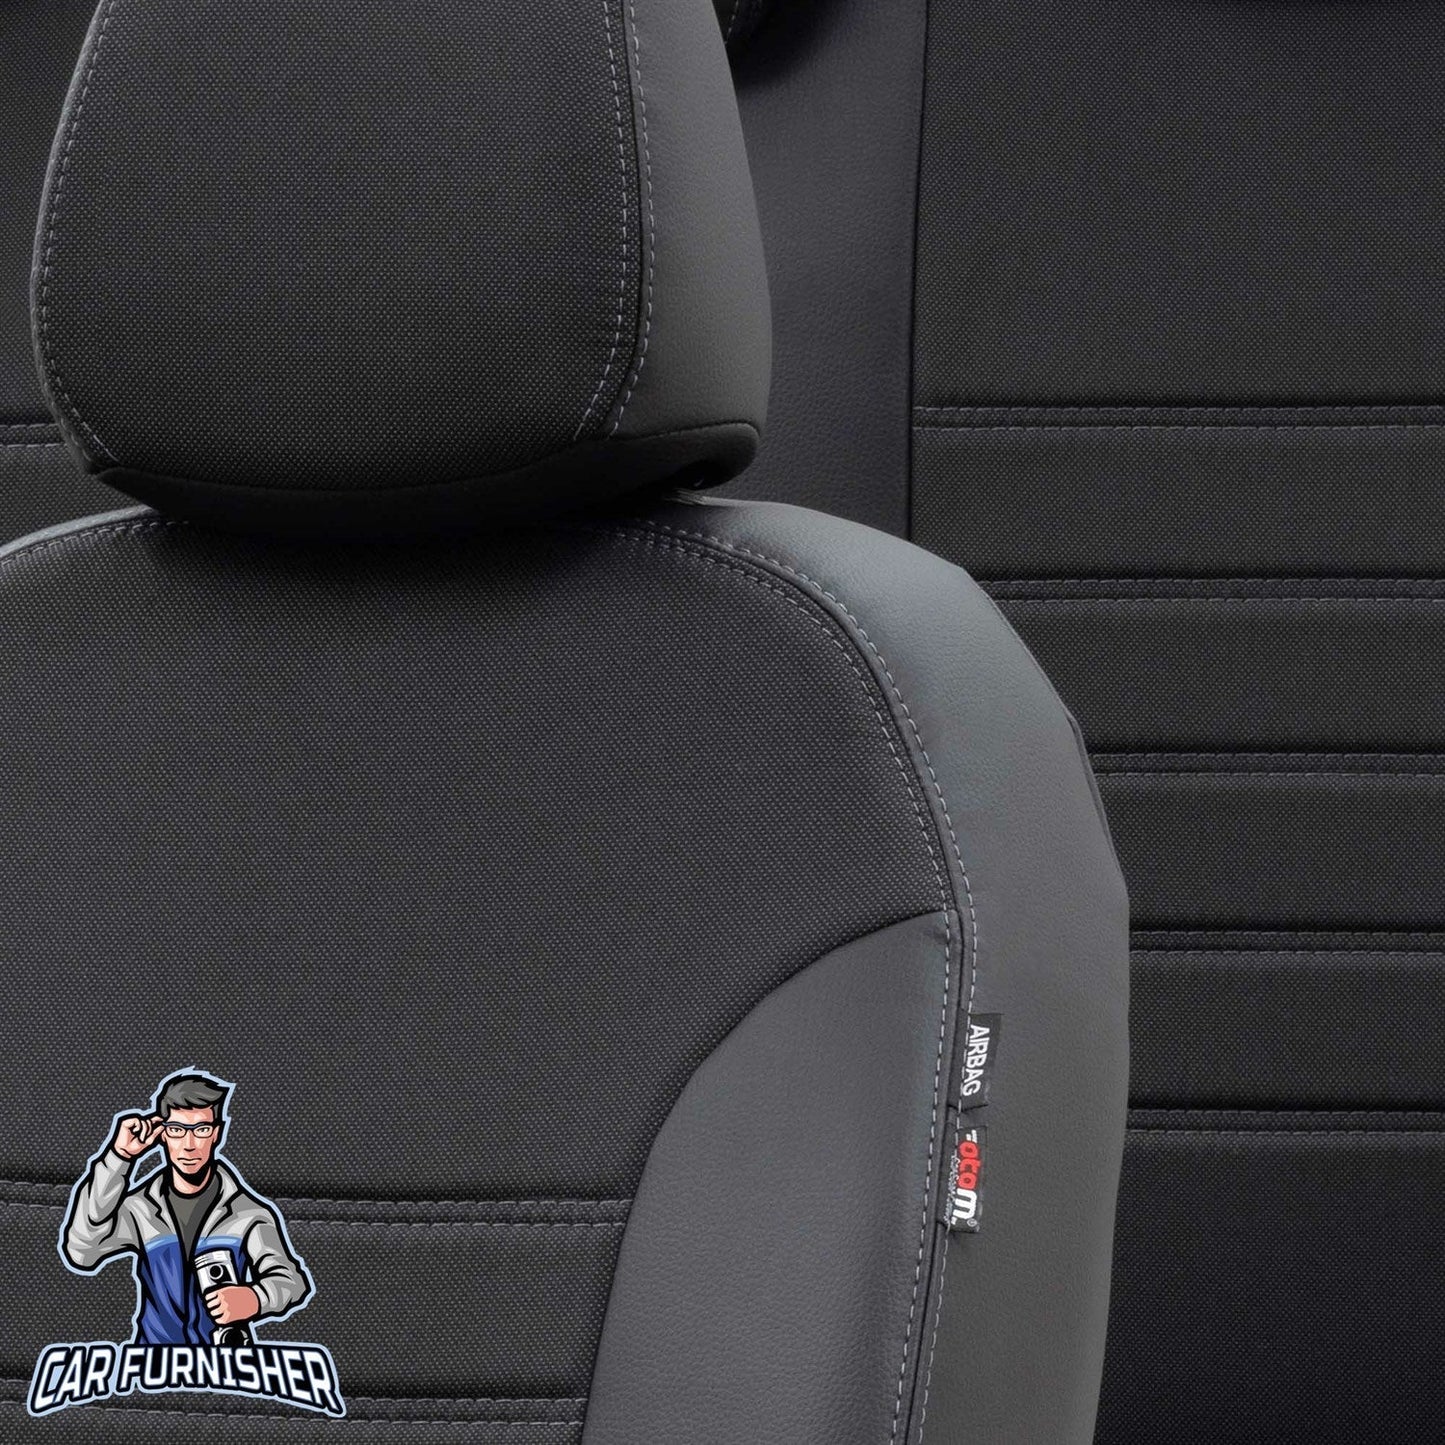 Volvo S90 Seat Cover Paris Leather & Jacquard Design Black Leather & Jacquard Fabric